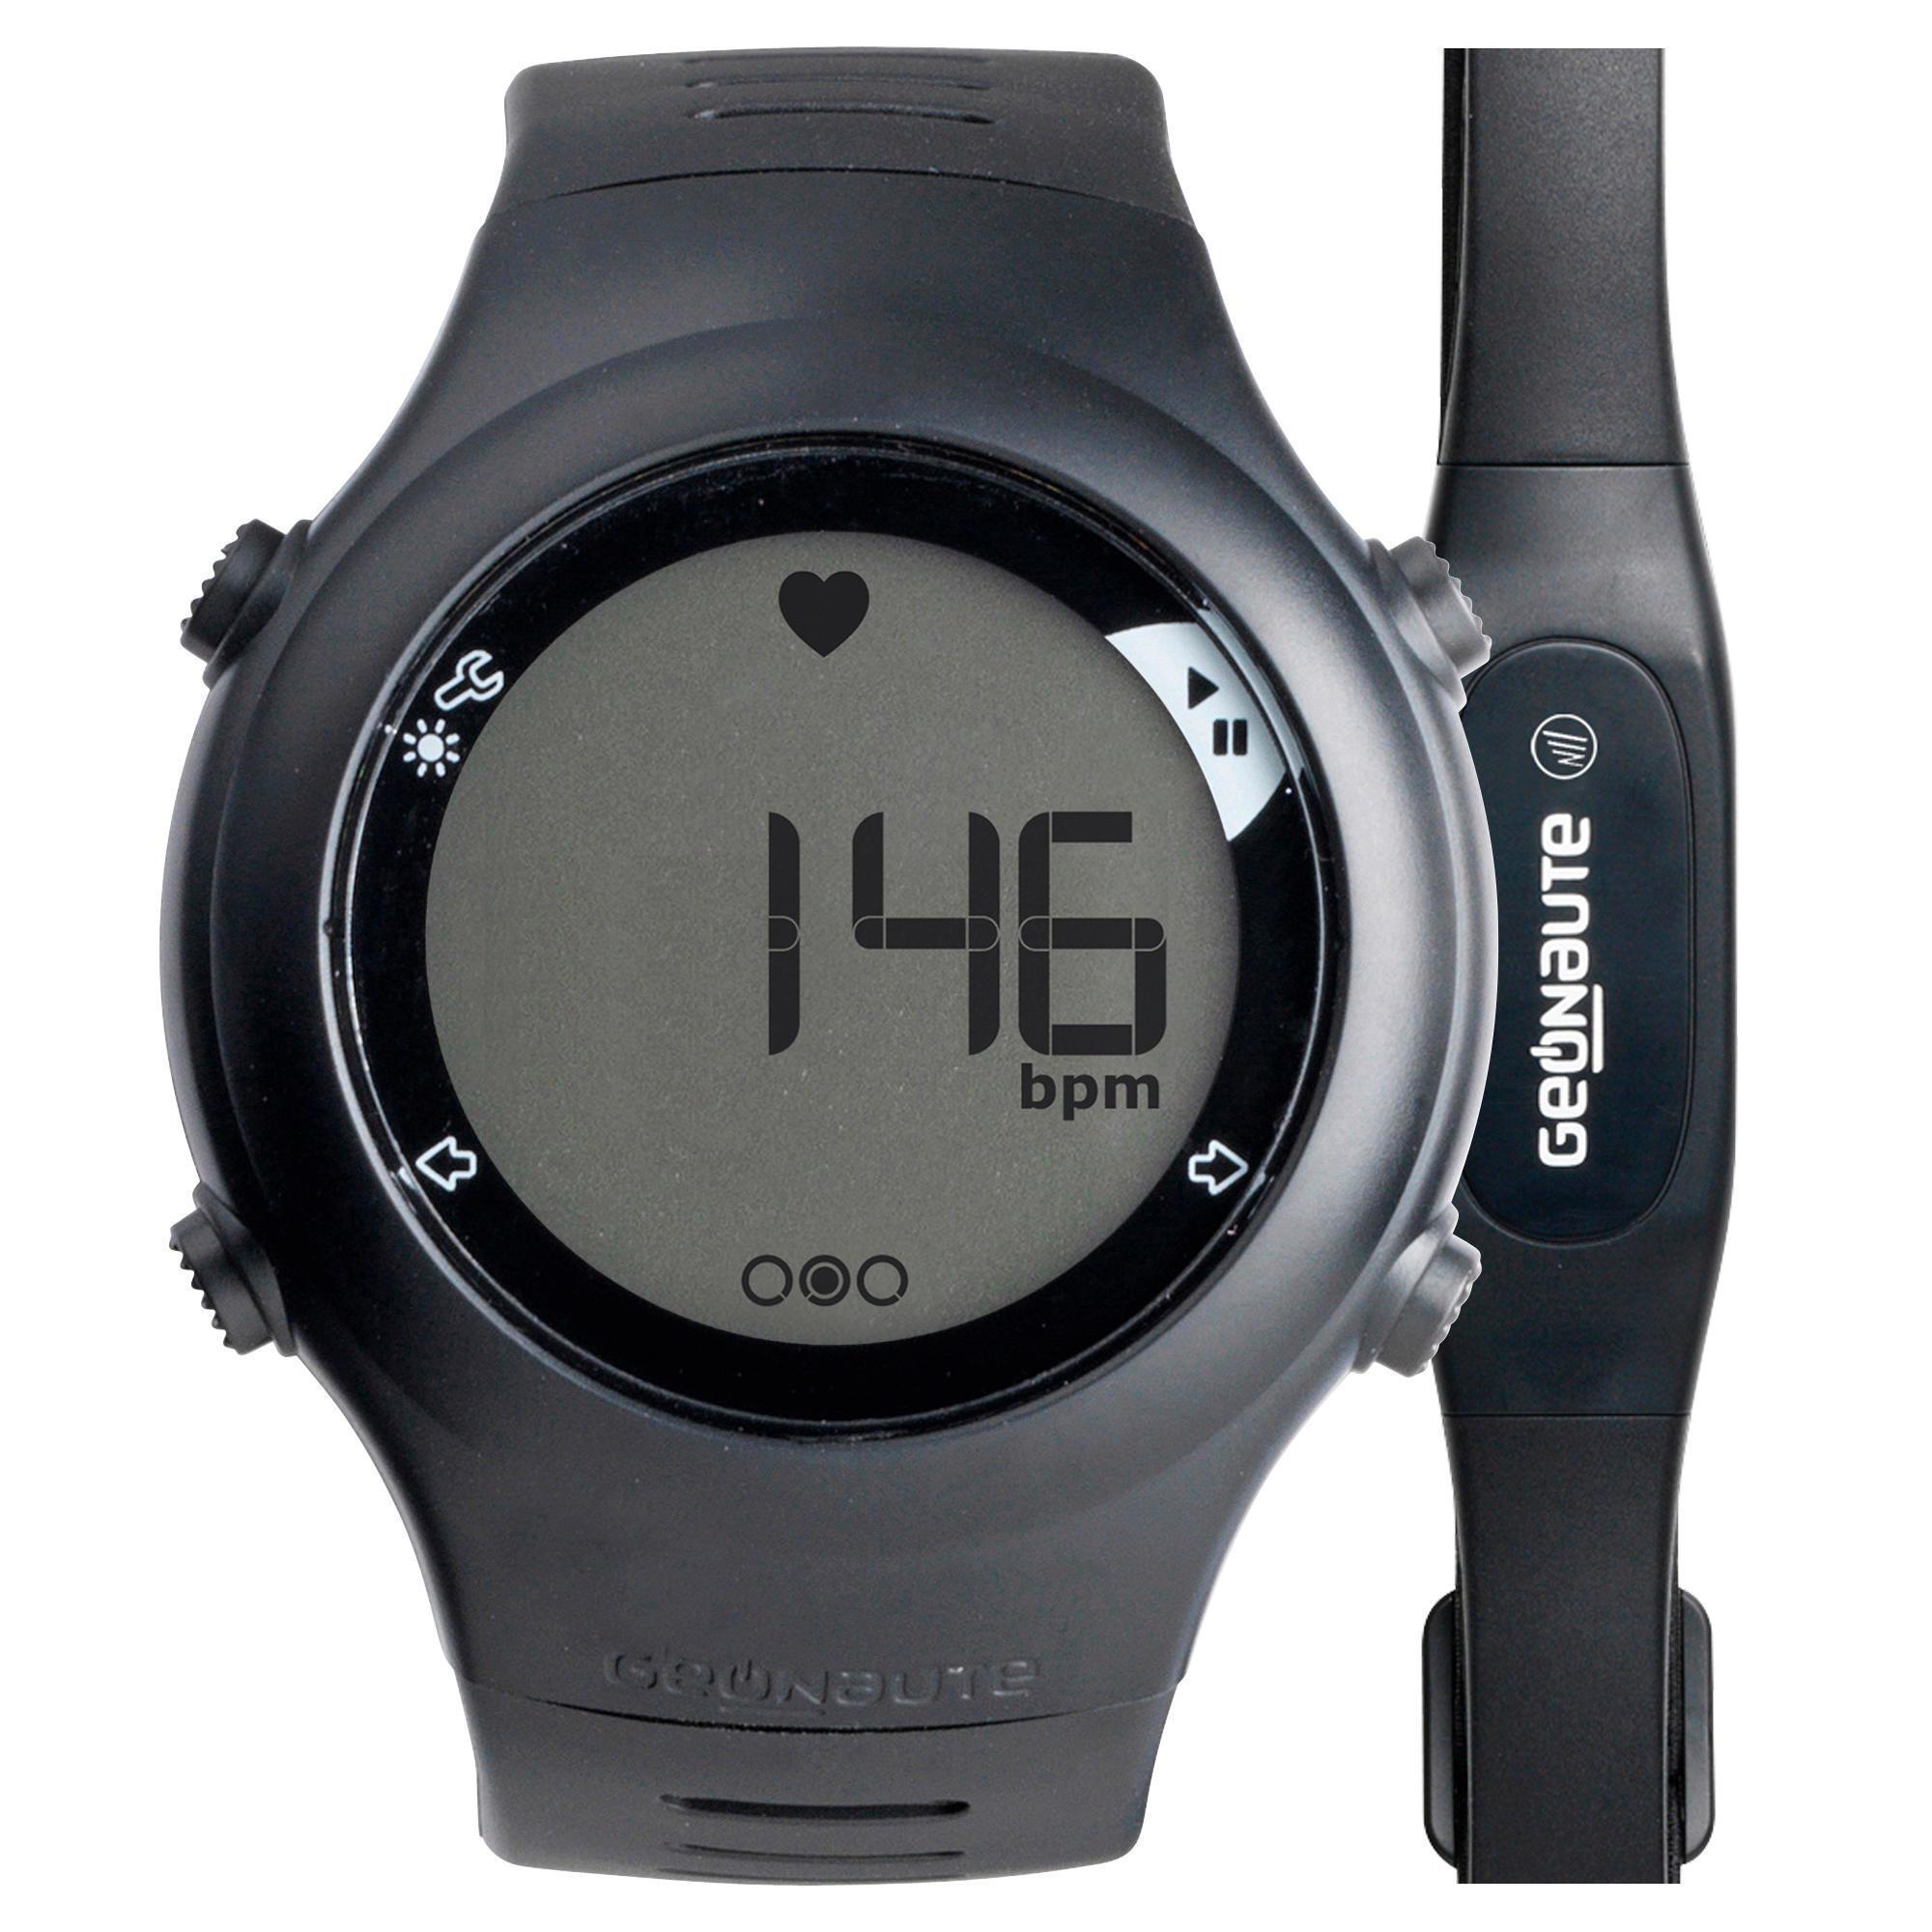 ONRHYTHM 110 runner's heart rate monitor watch black 2/5